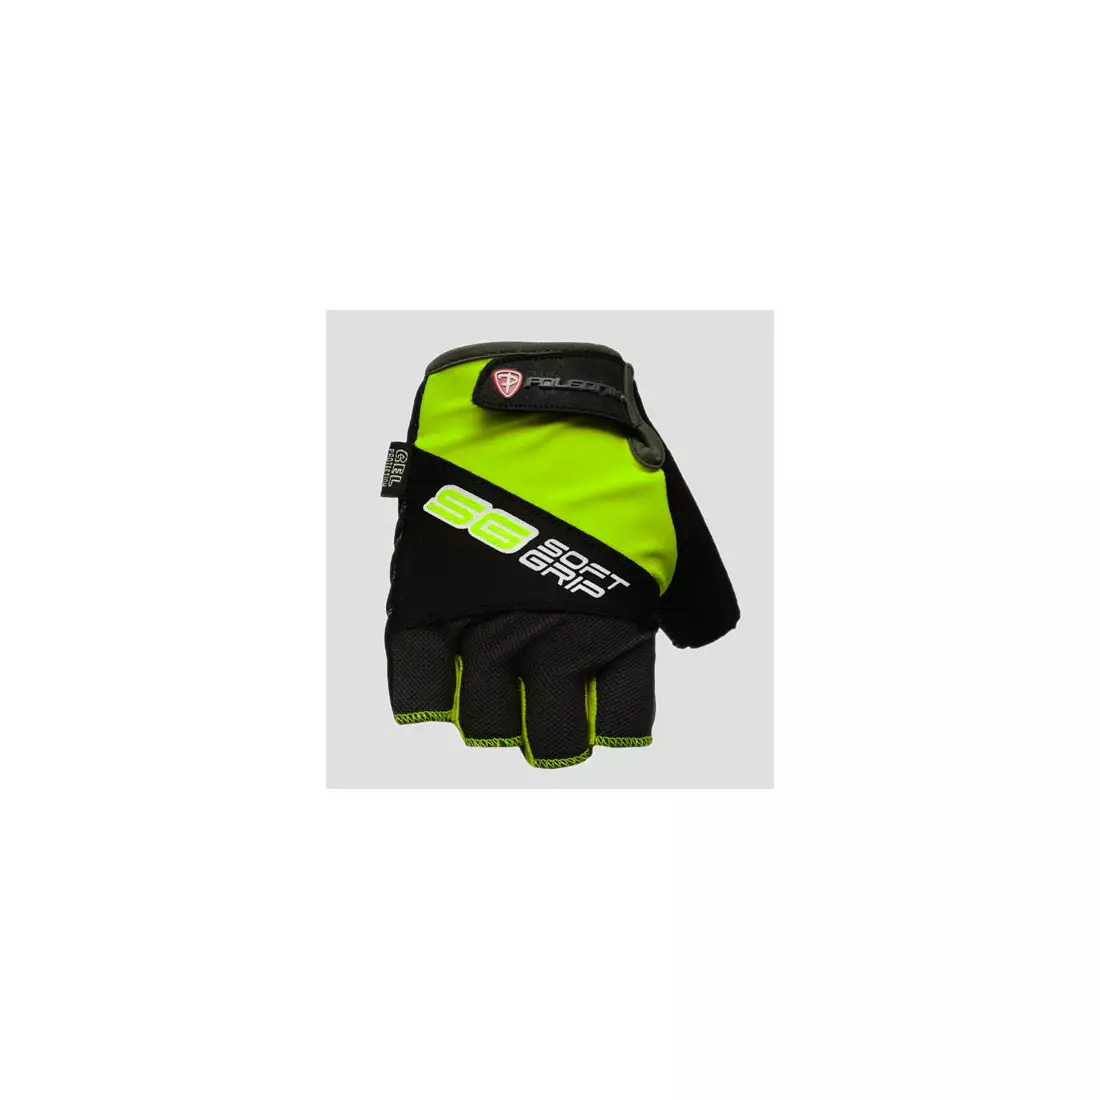 POLEDNIK SOFTGRIP NEW14 cyklistické rukavice, farba: Fluor